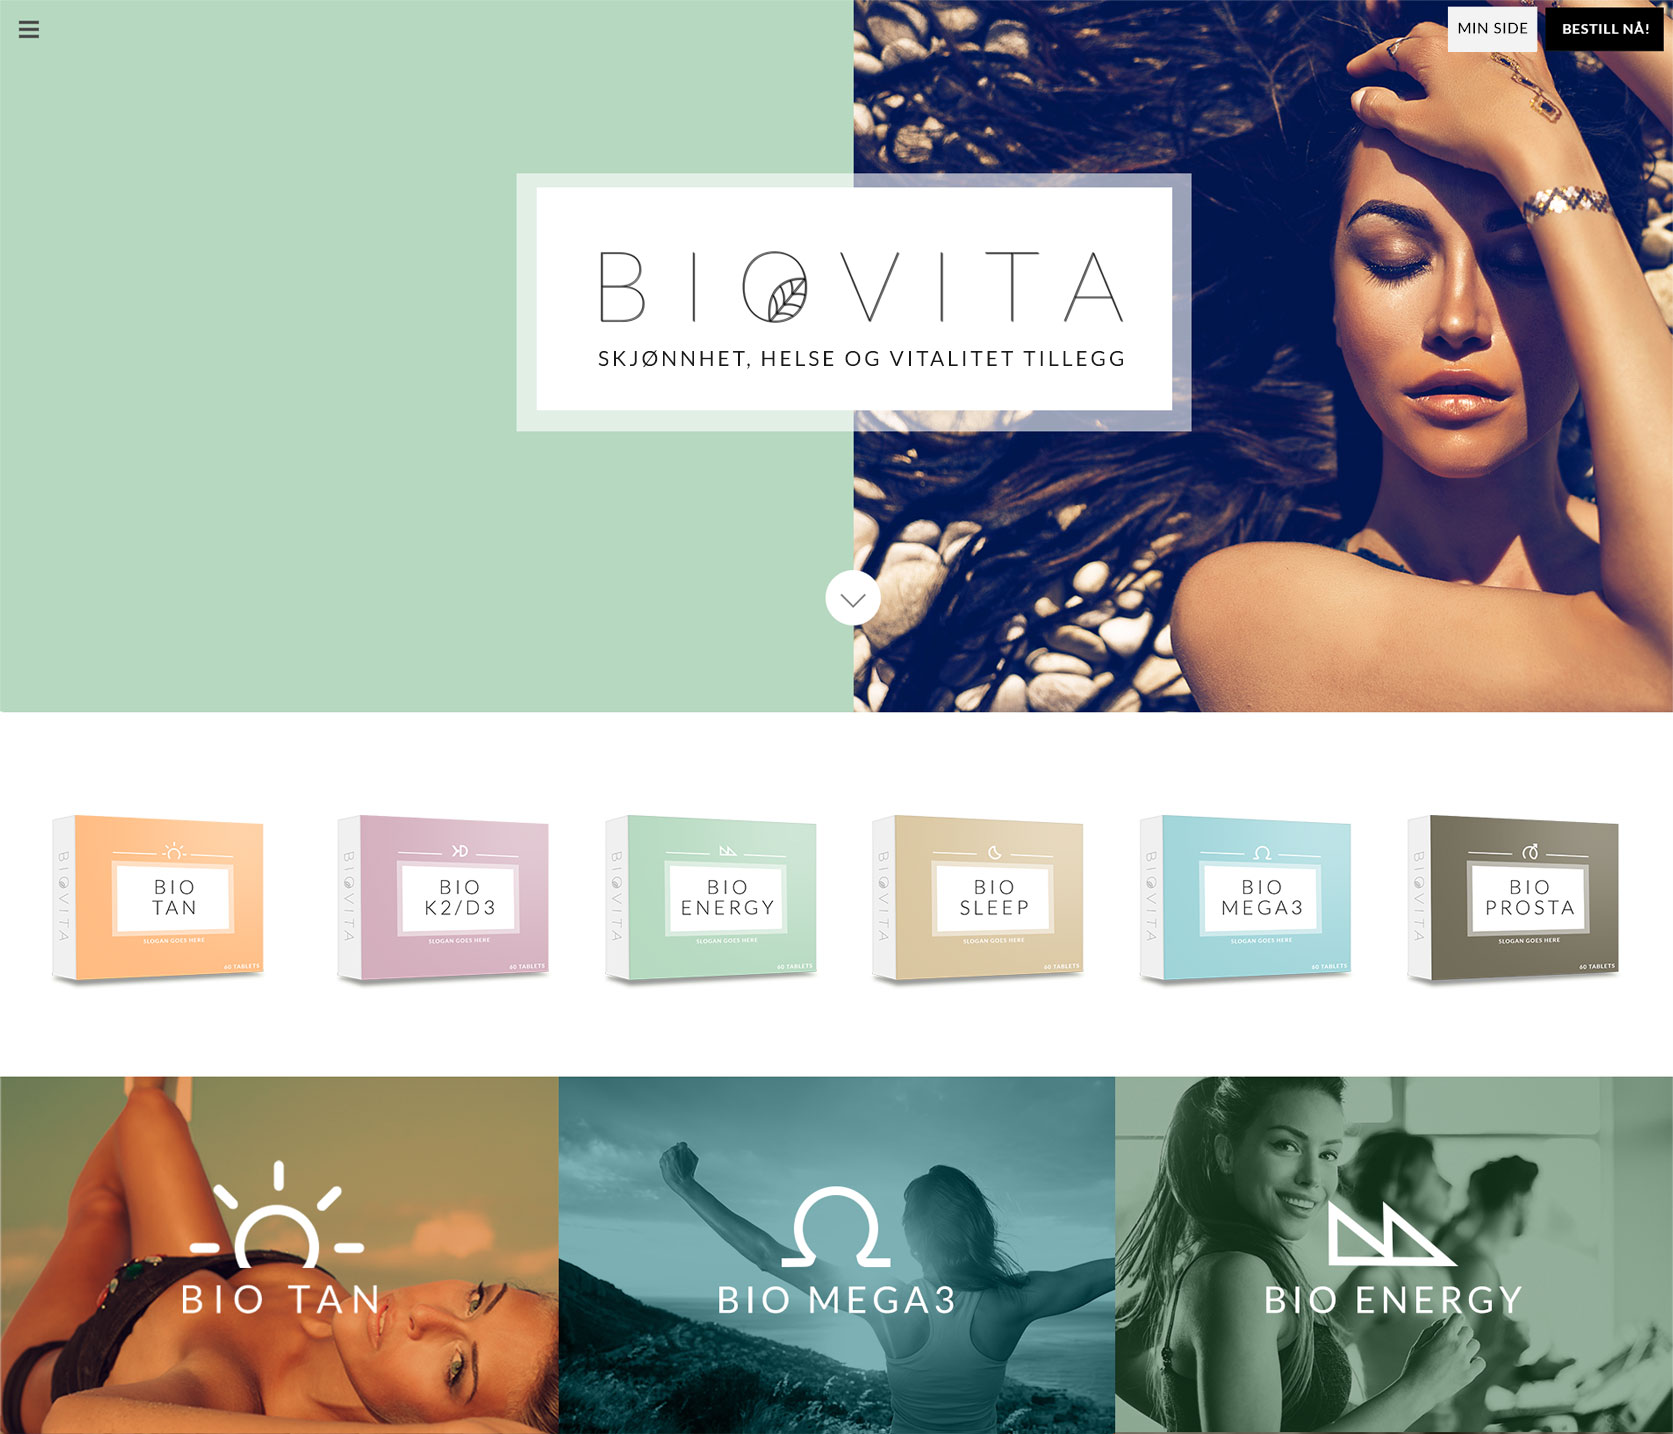 Biovita - Health Beauty & Vitality Supplements